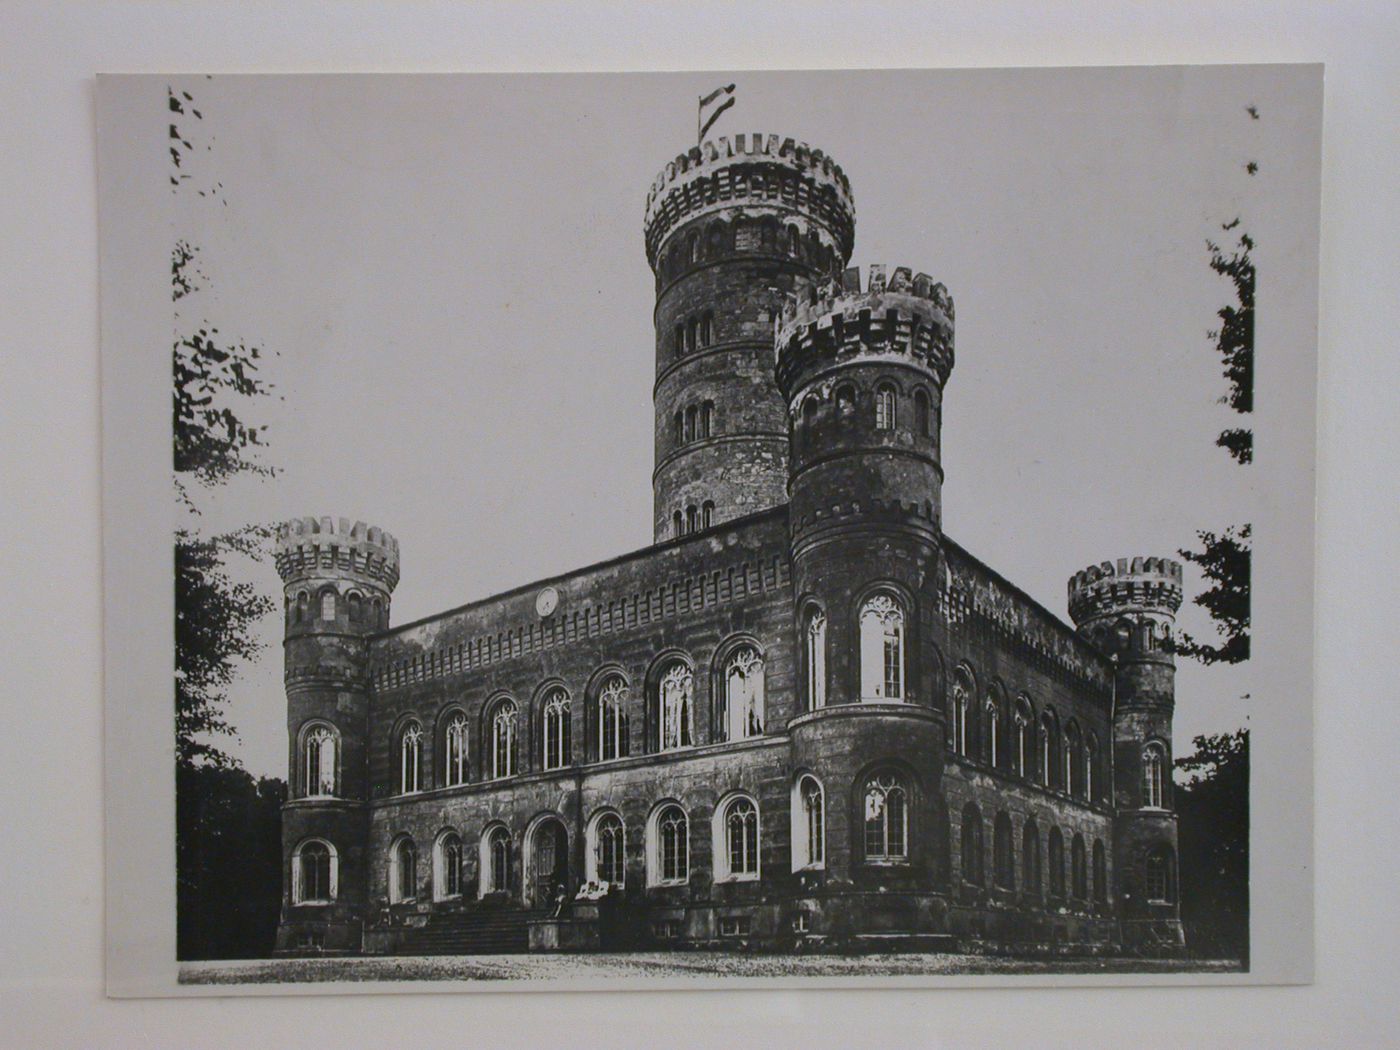 View of the principal façade of the Jagdschloss [Hunting Lodge] Fürst von Puttbus, Rügen, Germany